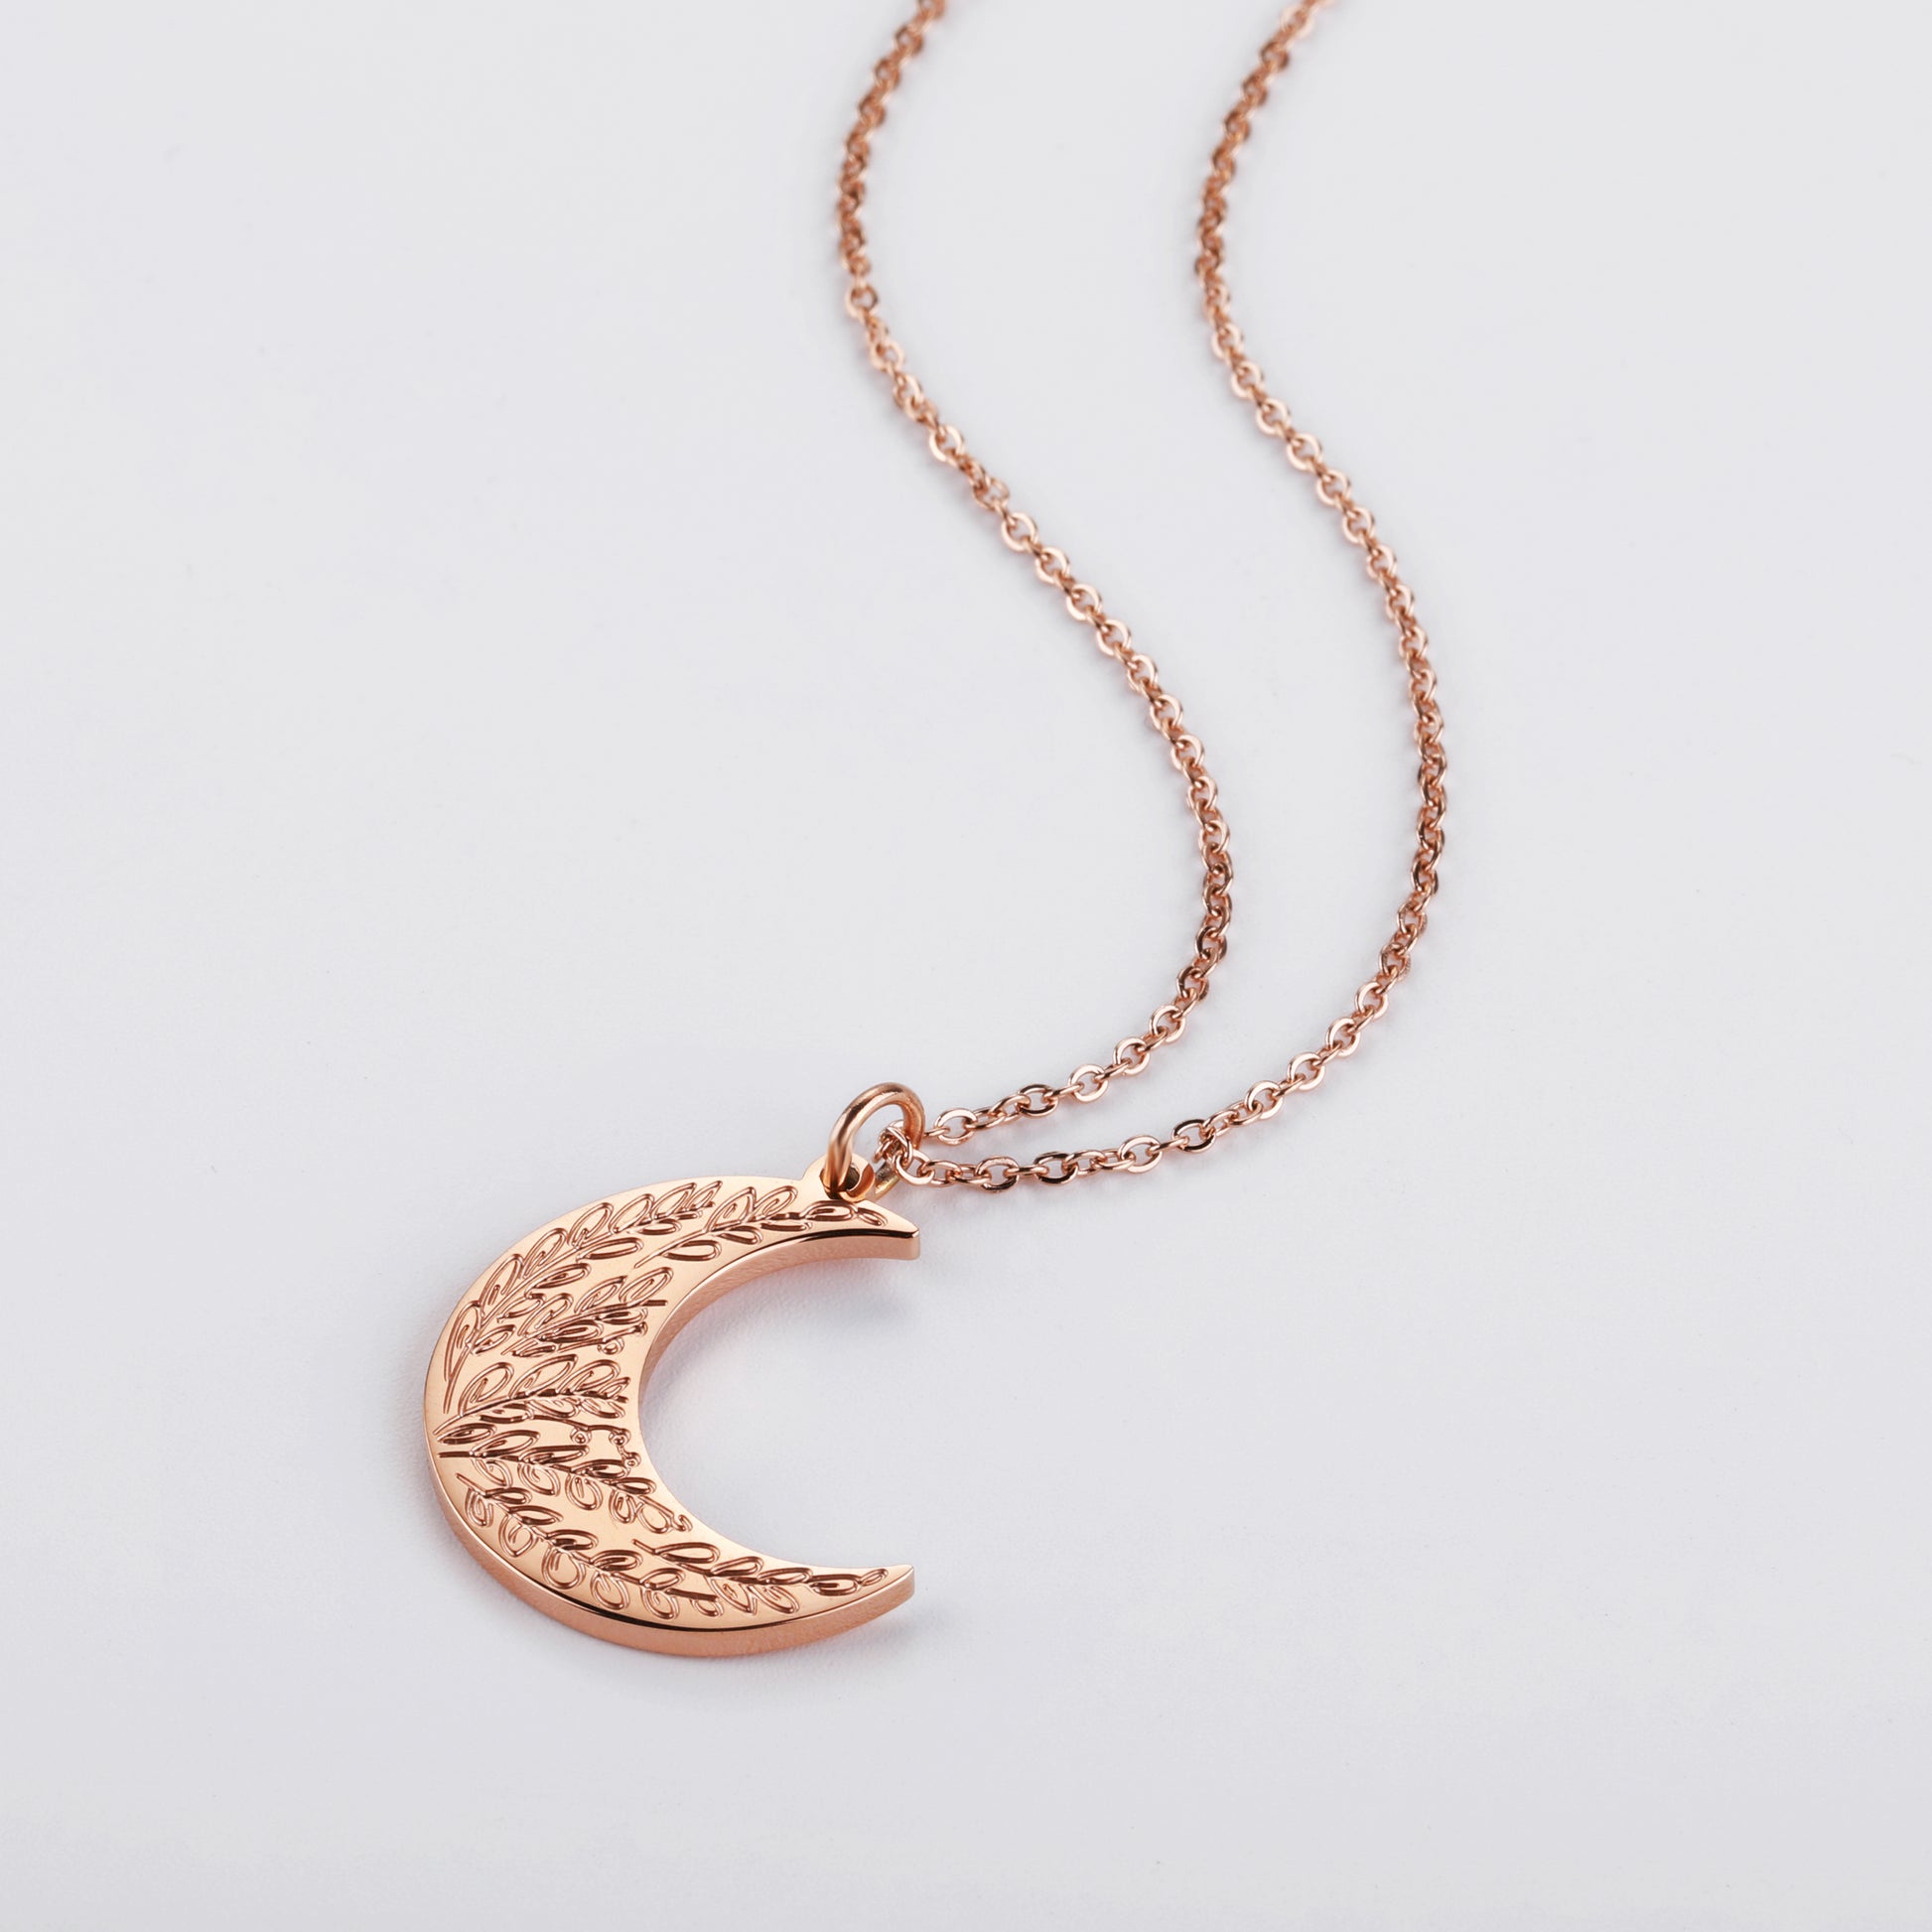 Darjali Jewelry Botanical Moon Necklace 18K Rose Gold